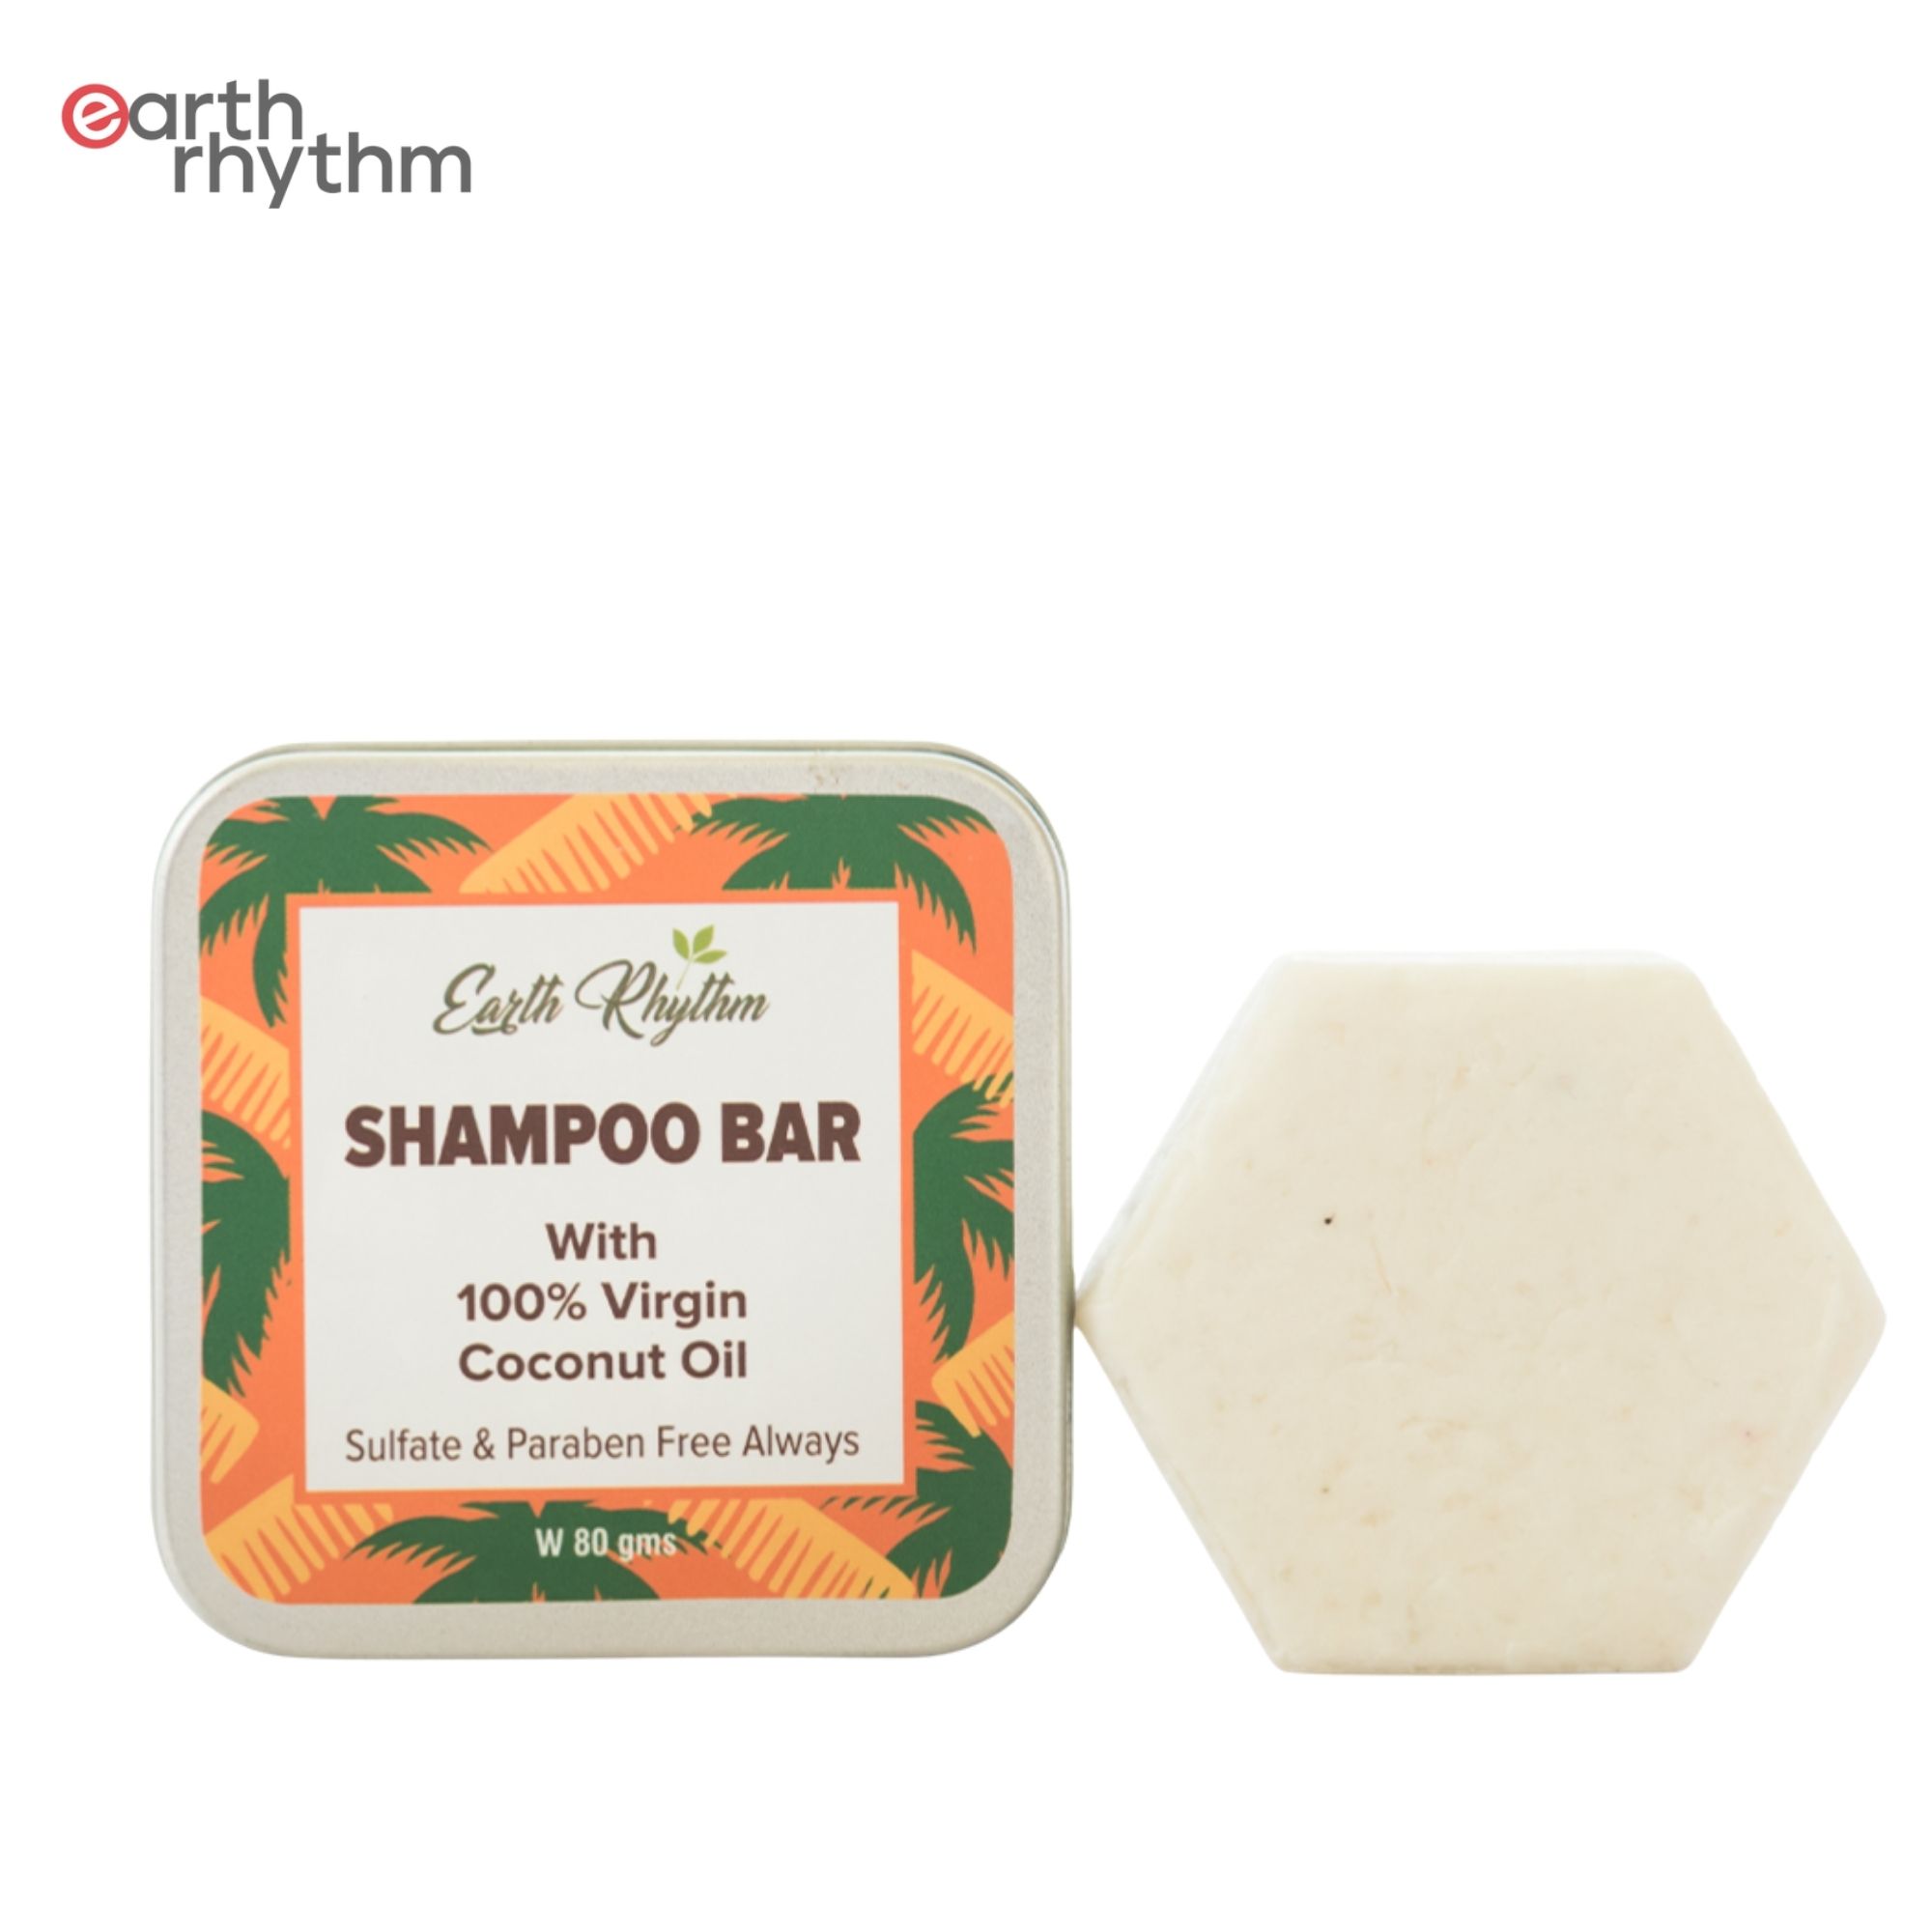 Earth Rhythm 100% Virgin Coconut Oil Shampoo Bar - 80 gm (Tin Box)